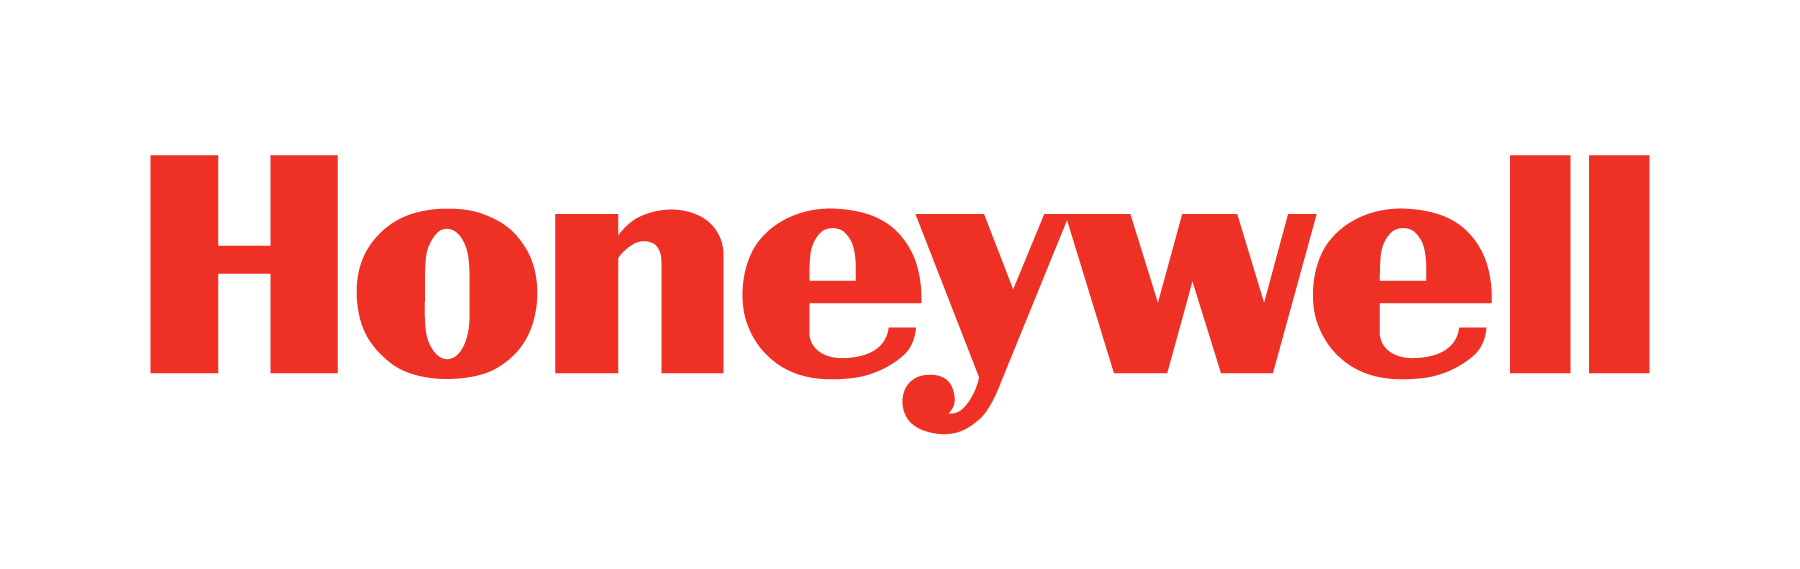 Honeywell Aerospace logo